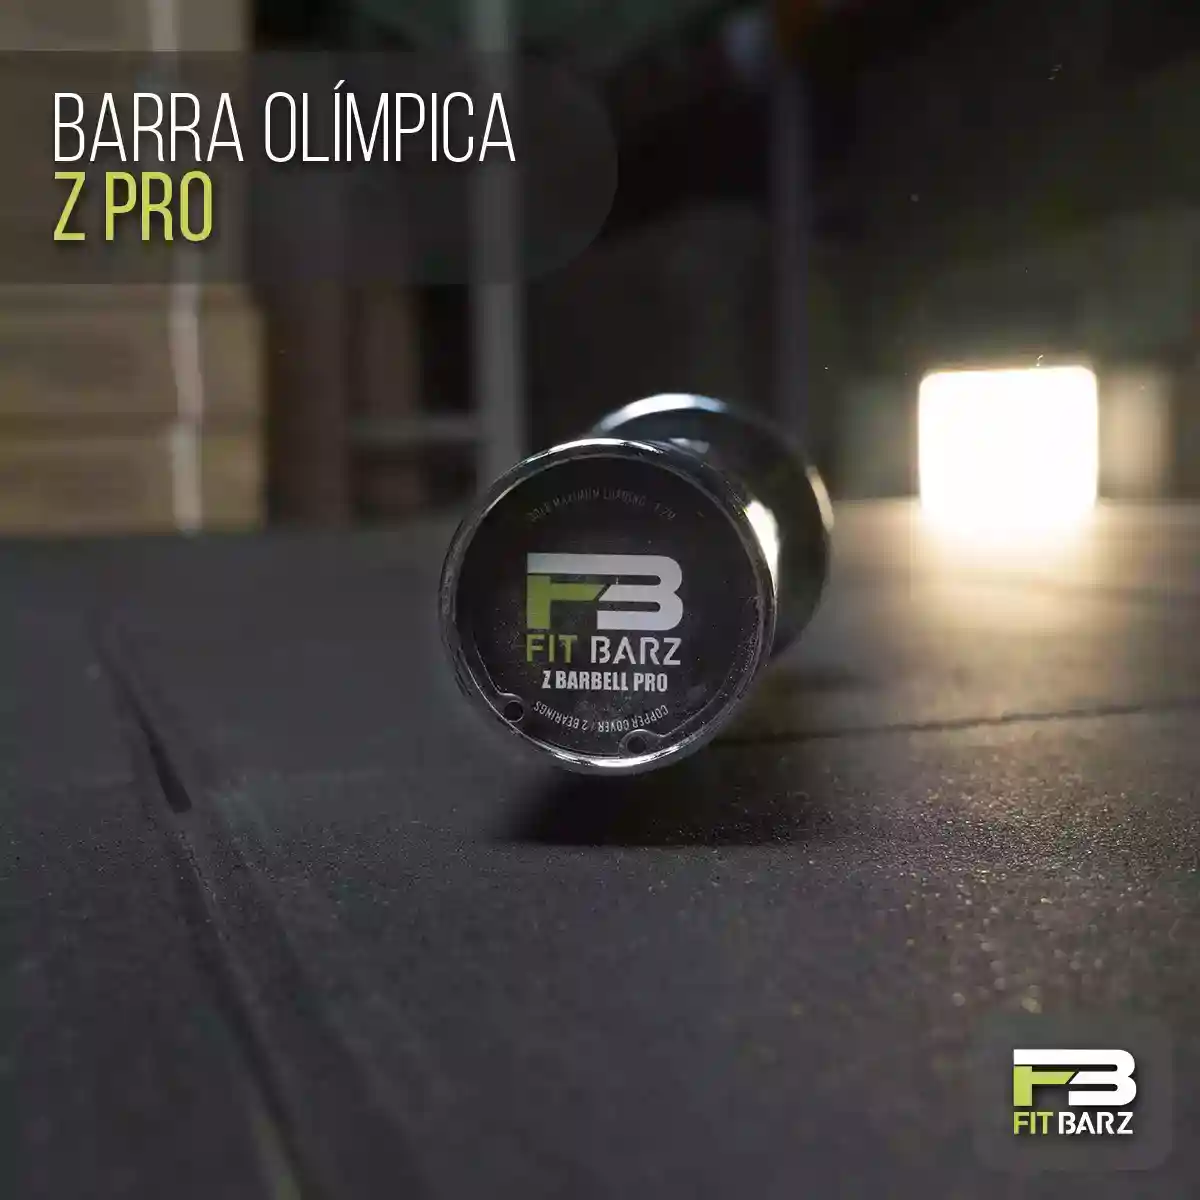 BARRA Z OLIMPICA QUALITY - Ultra Fitness